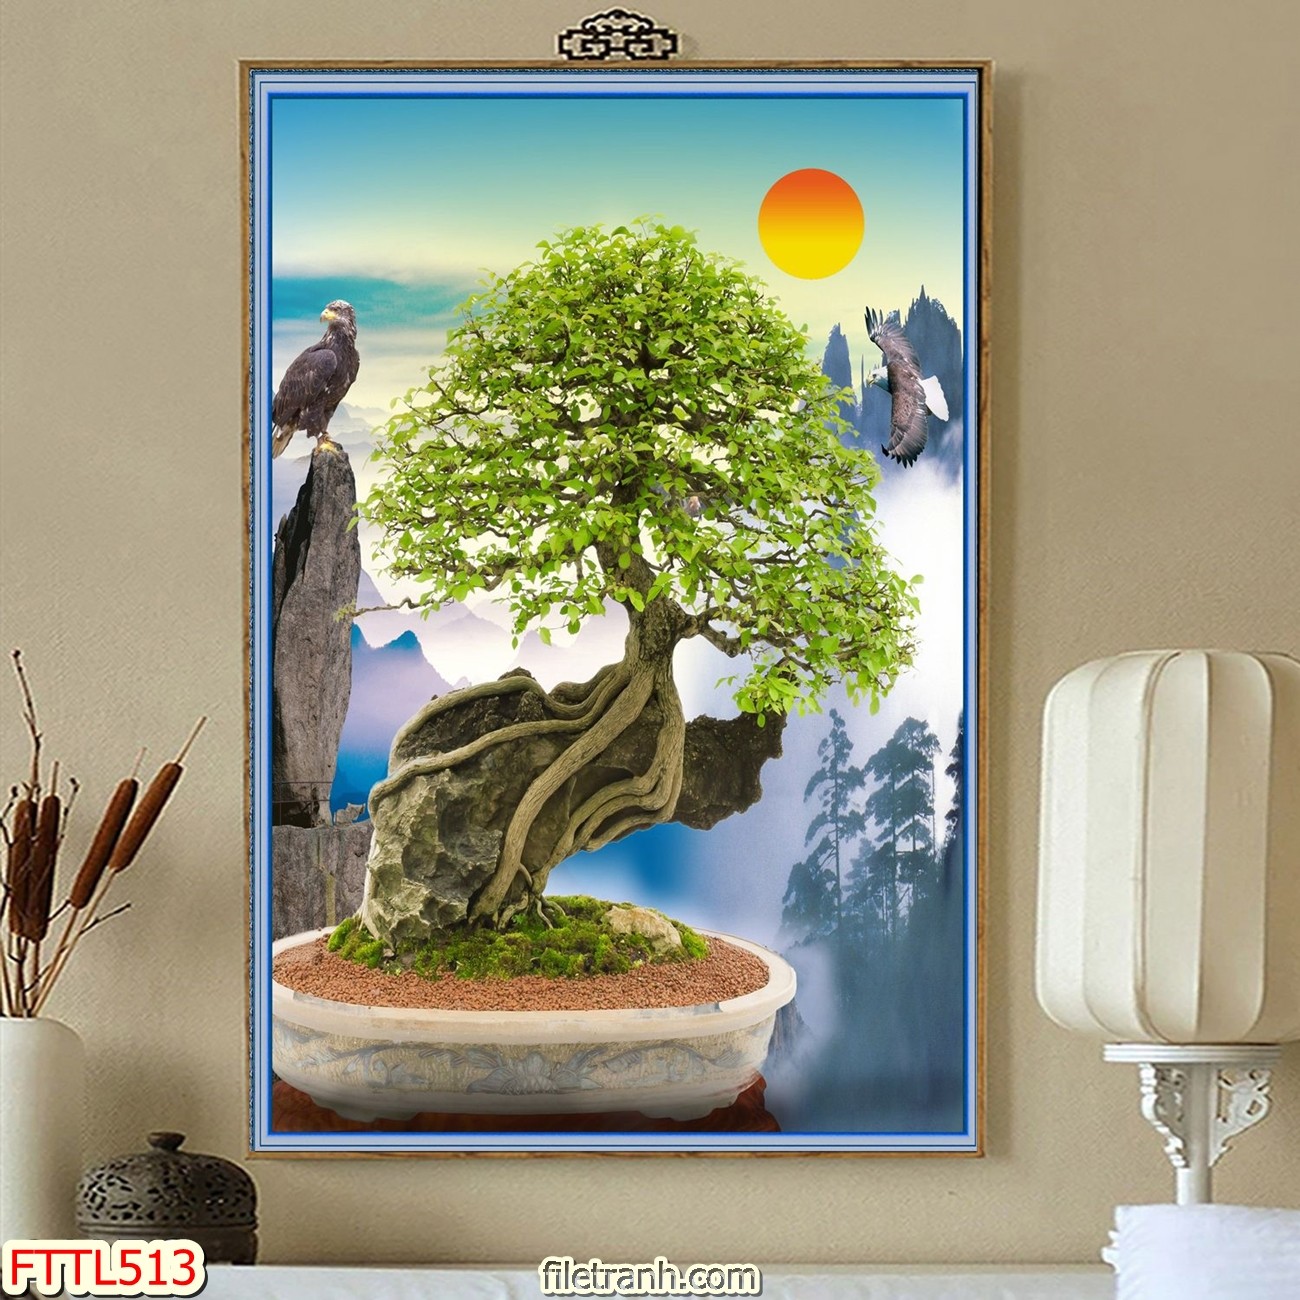 https://filetranh.com/file-tranh-chau-mai-bonsai/file-tranh-chau-mai-bonsai-fttl513.html